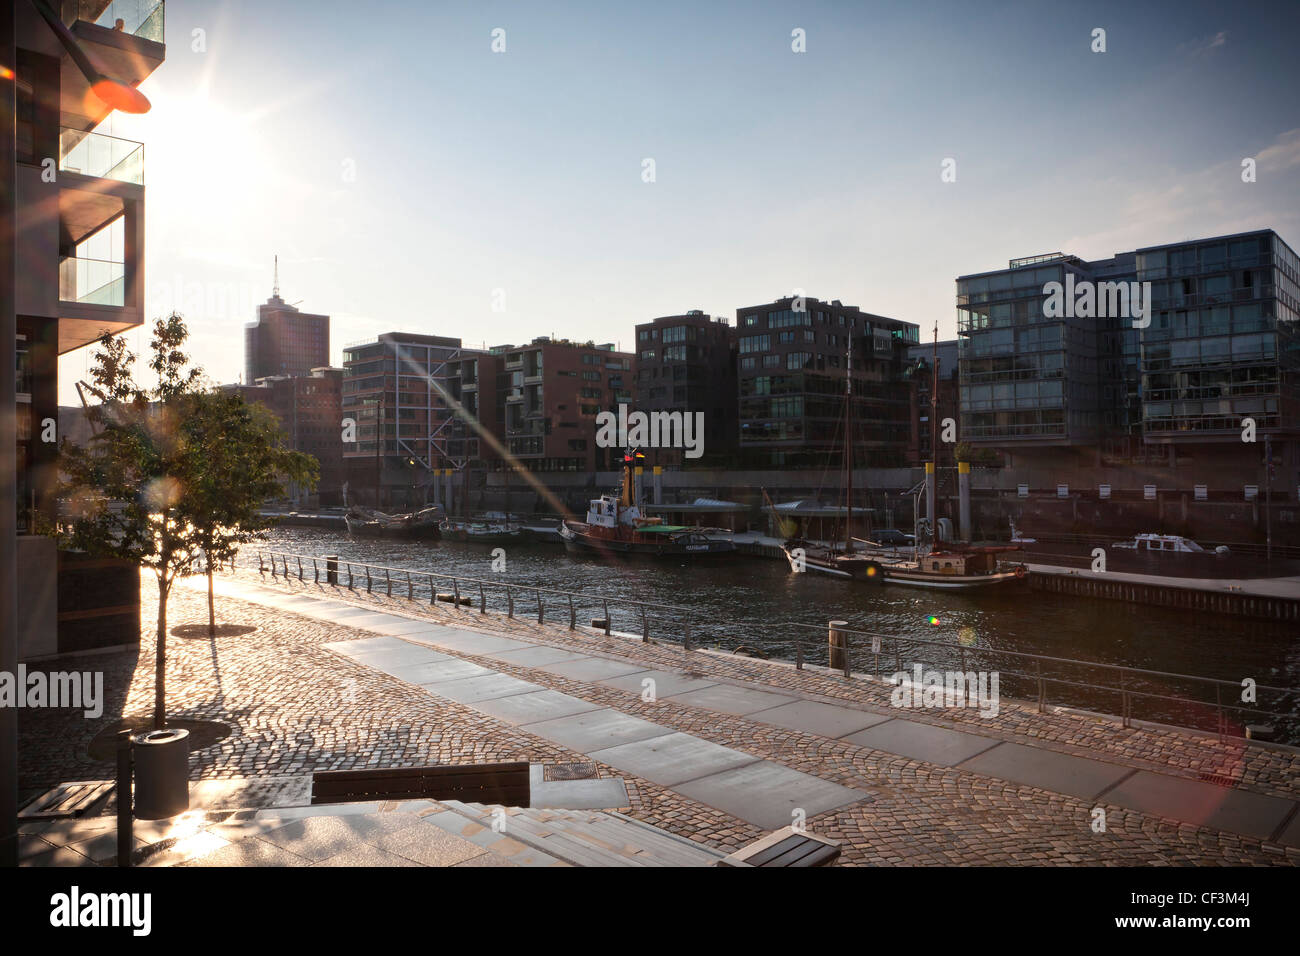 Buidlings at Sandtorkai, HafenCity, Hamburg, Germany, Europe Stock Photo